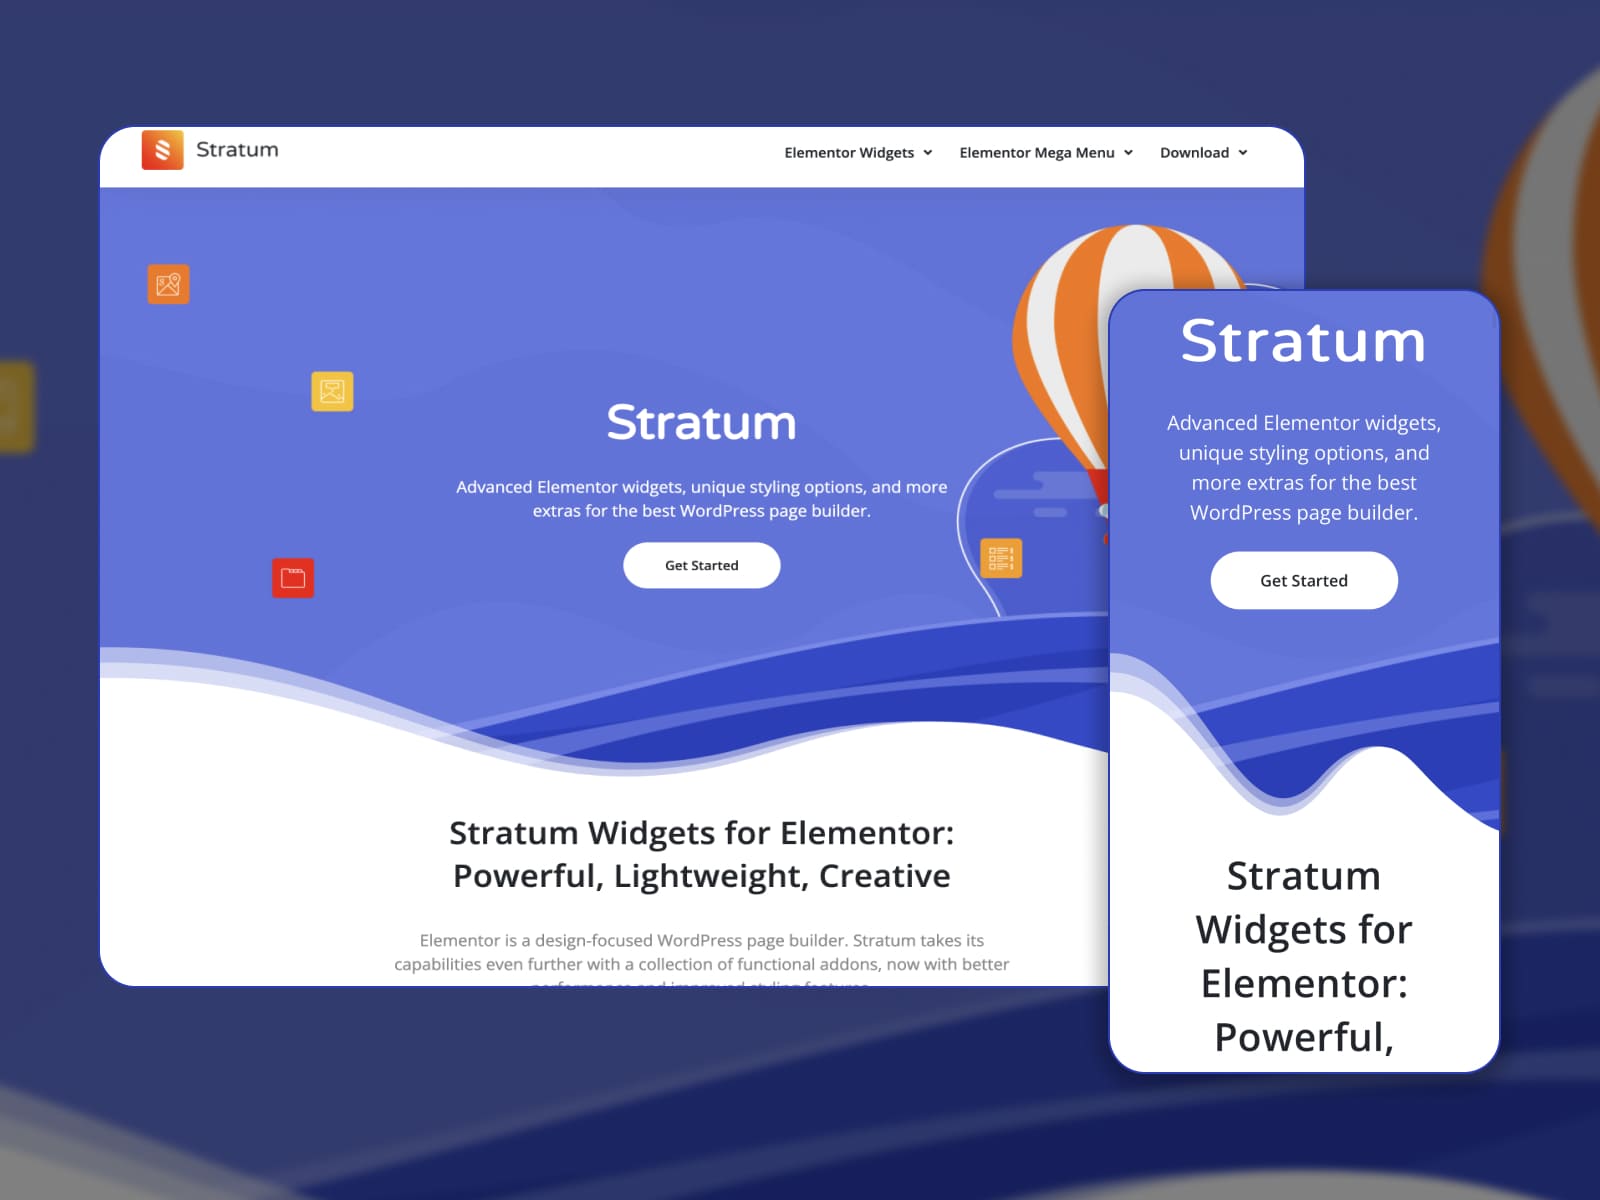 Stratum Elementor widgets to add content to the WordPress blog.